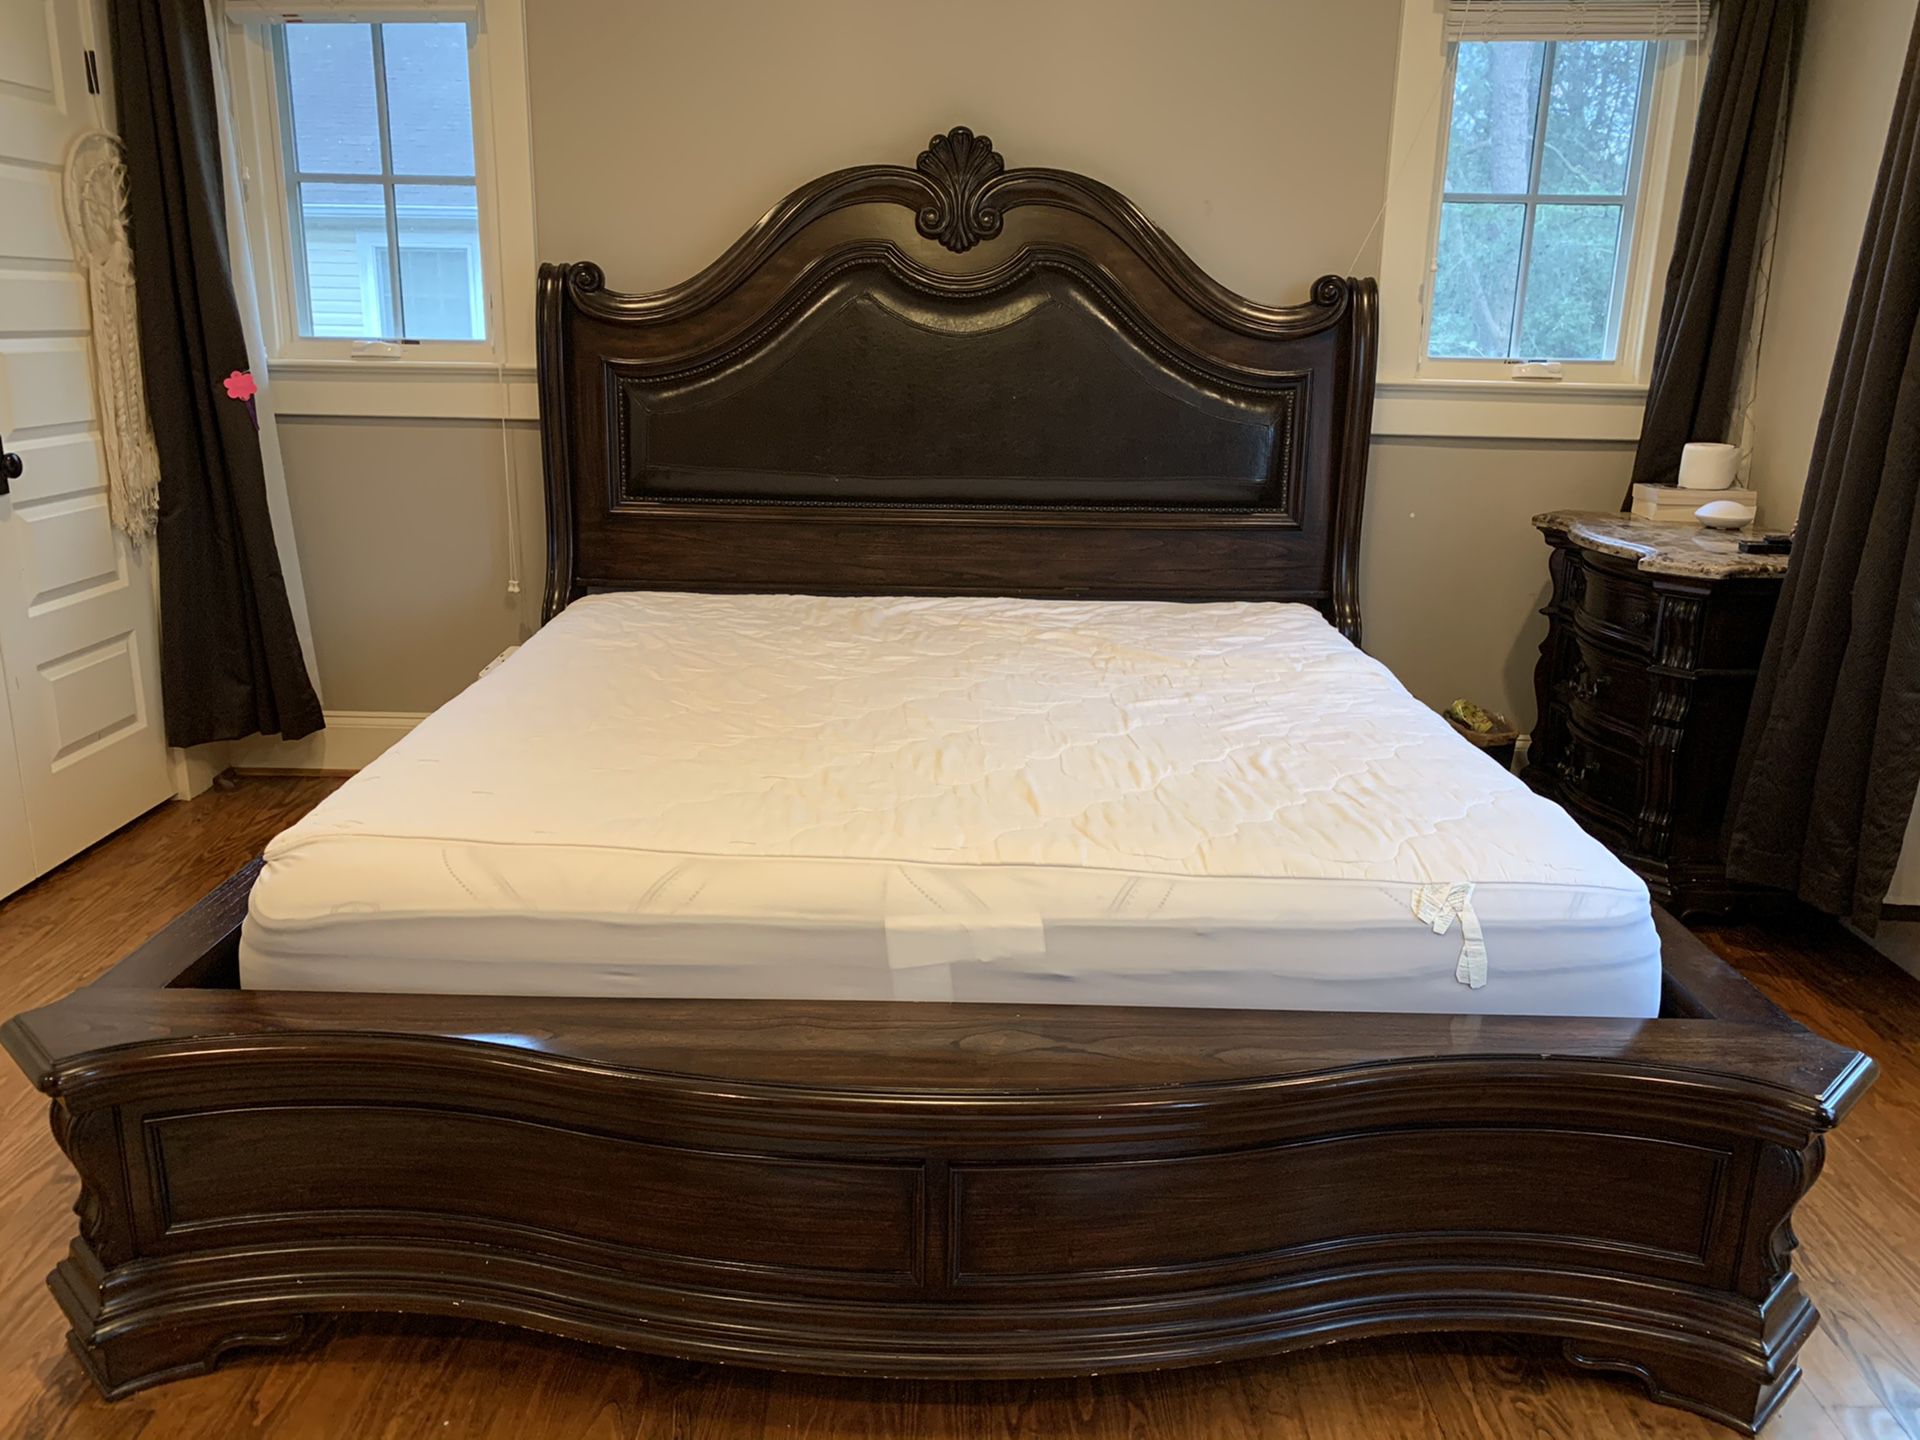 Haverty’s Villa Sonoma bedroom solid wood and granite set